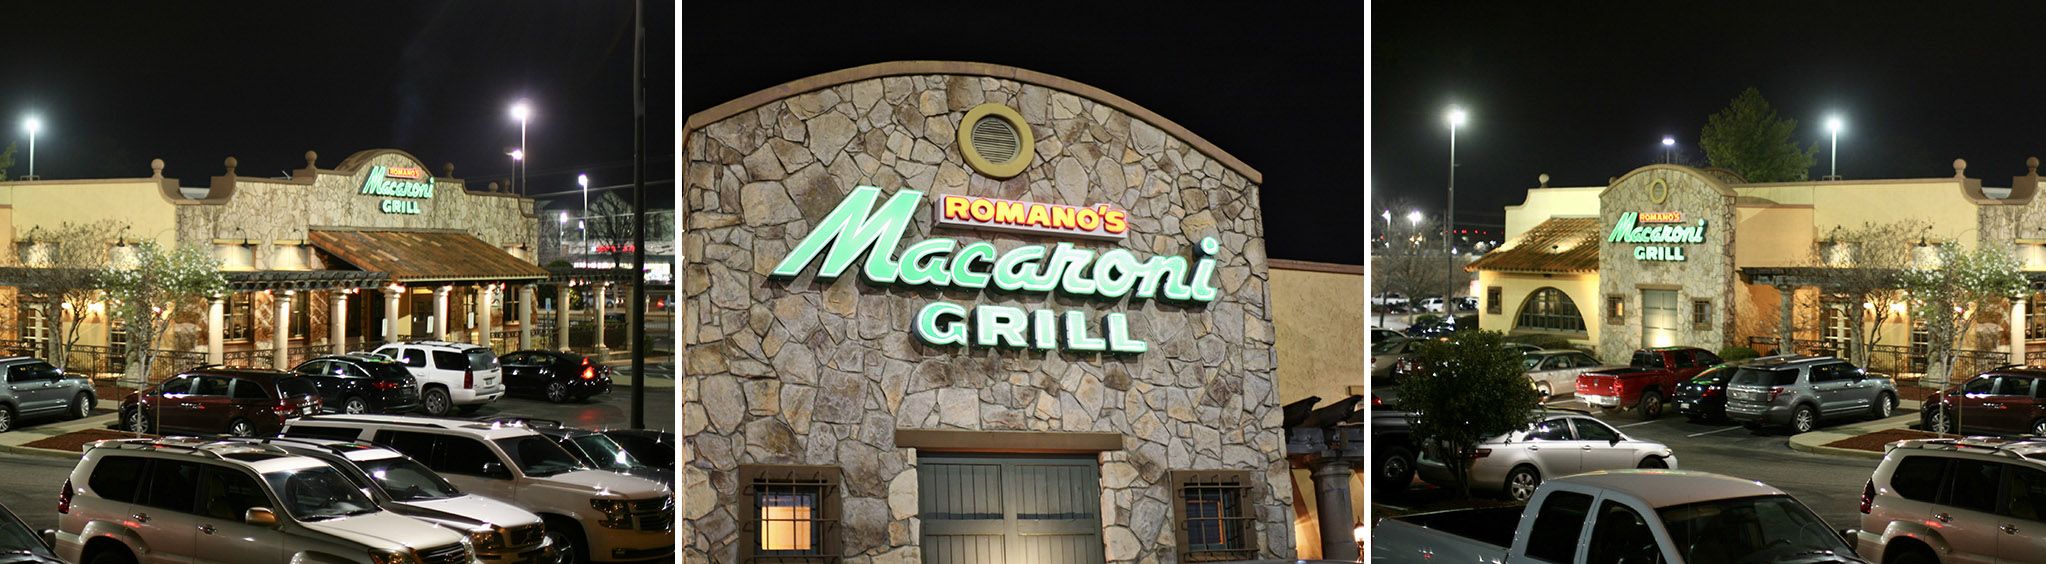 Romano's Macaroni Grill at Opry Mills